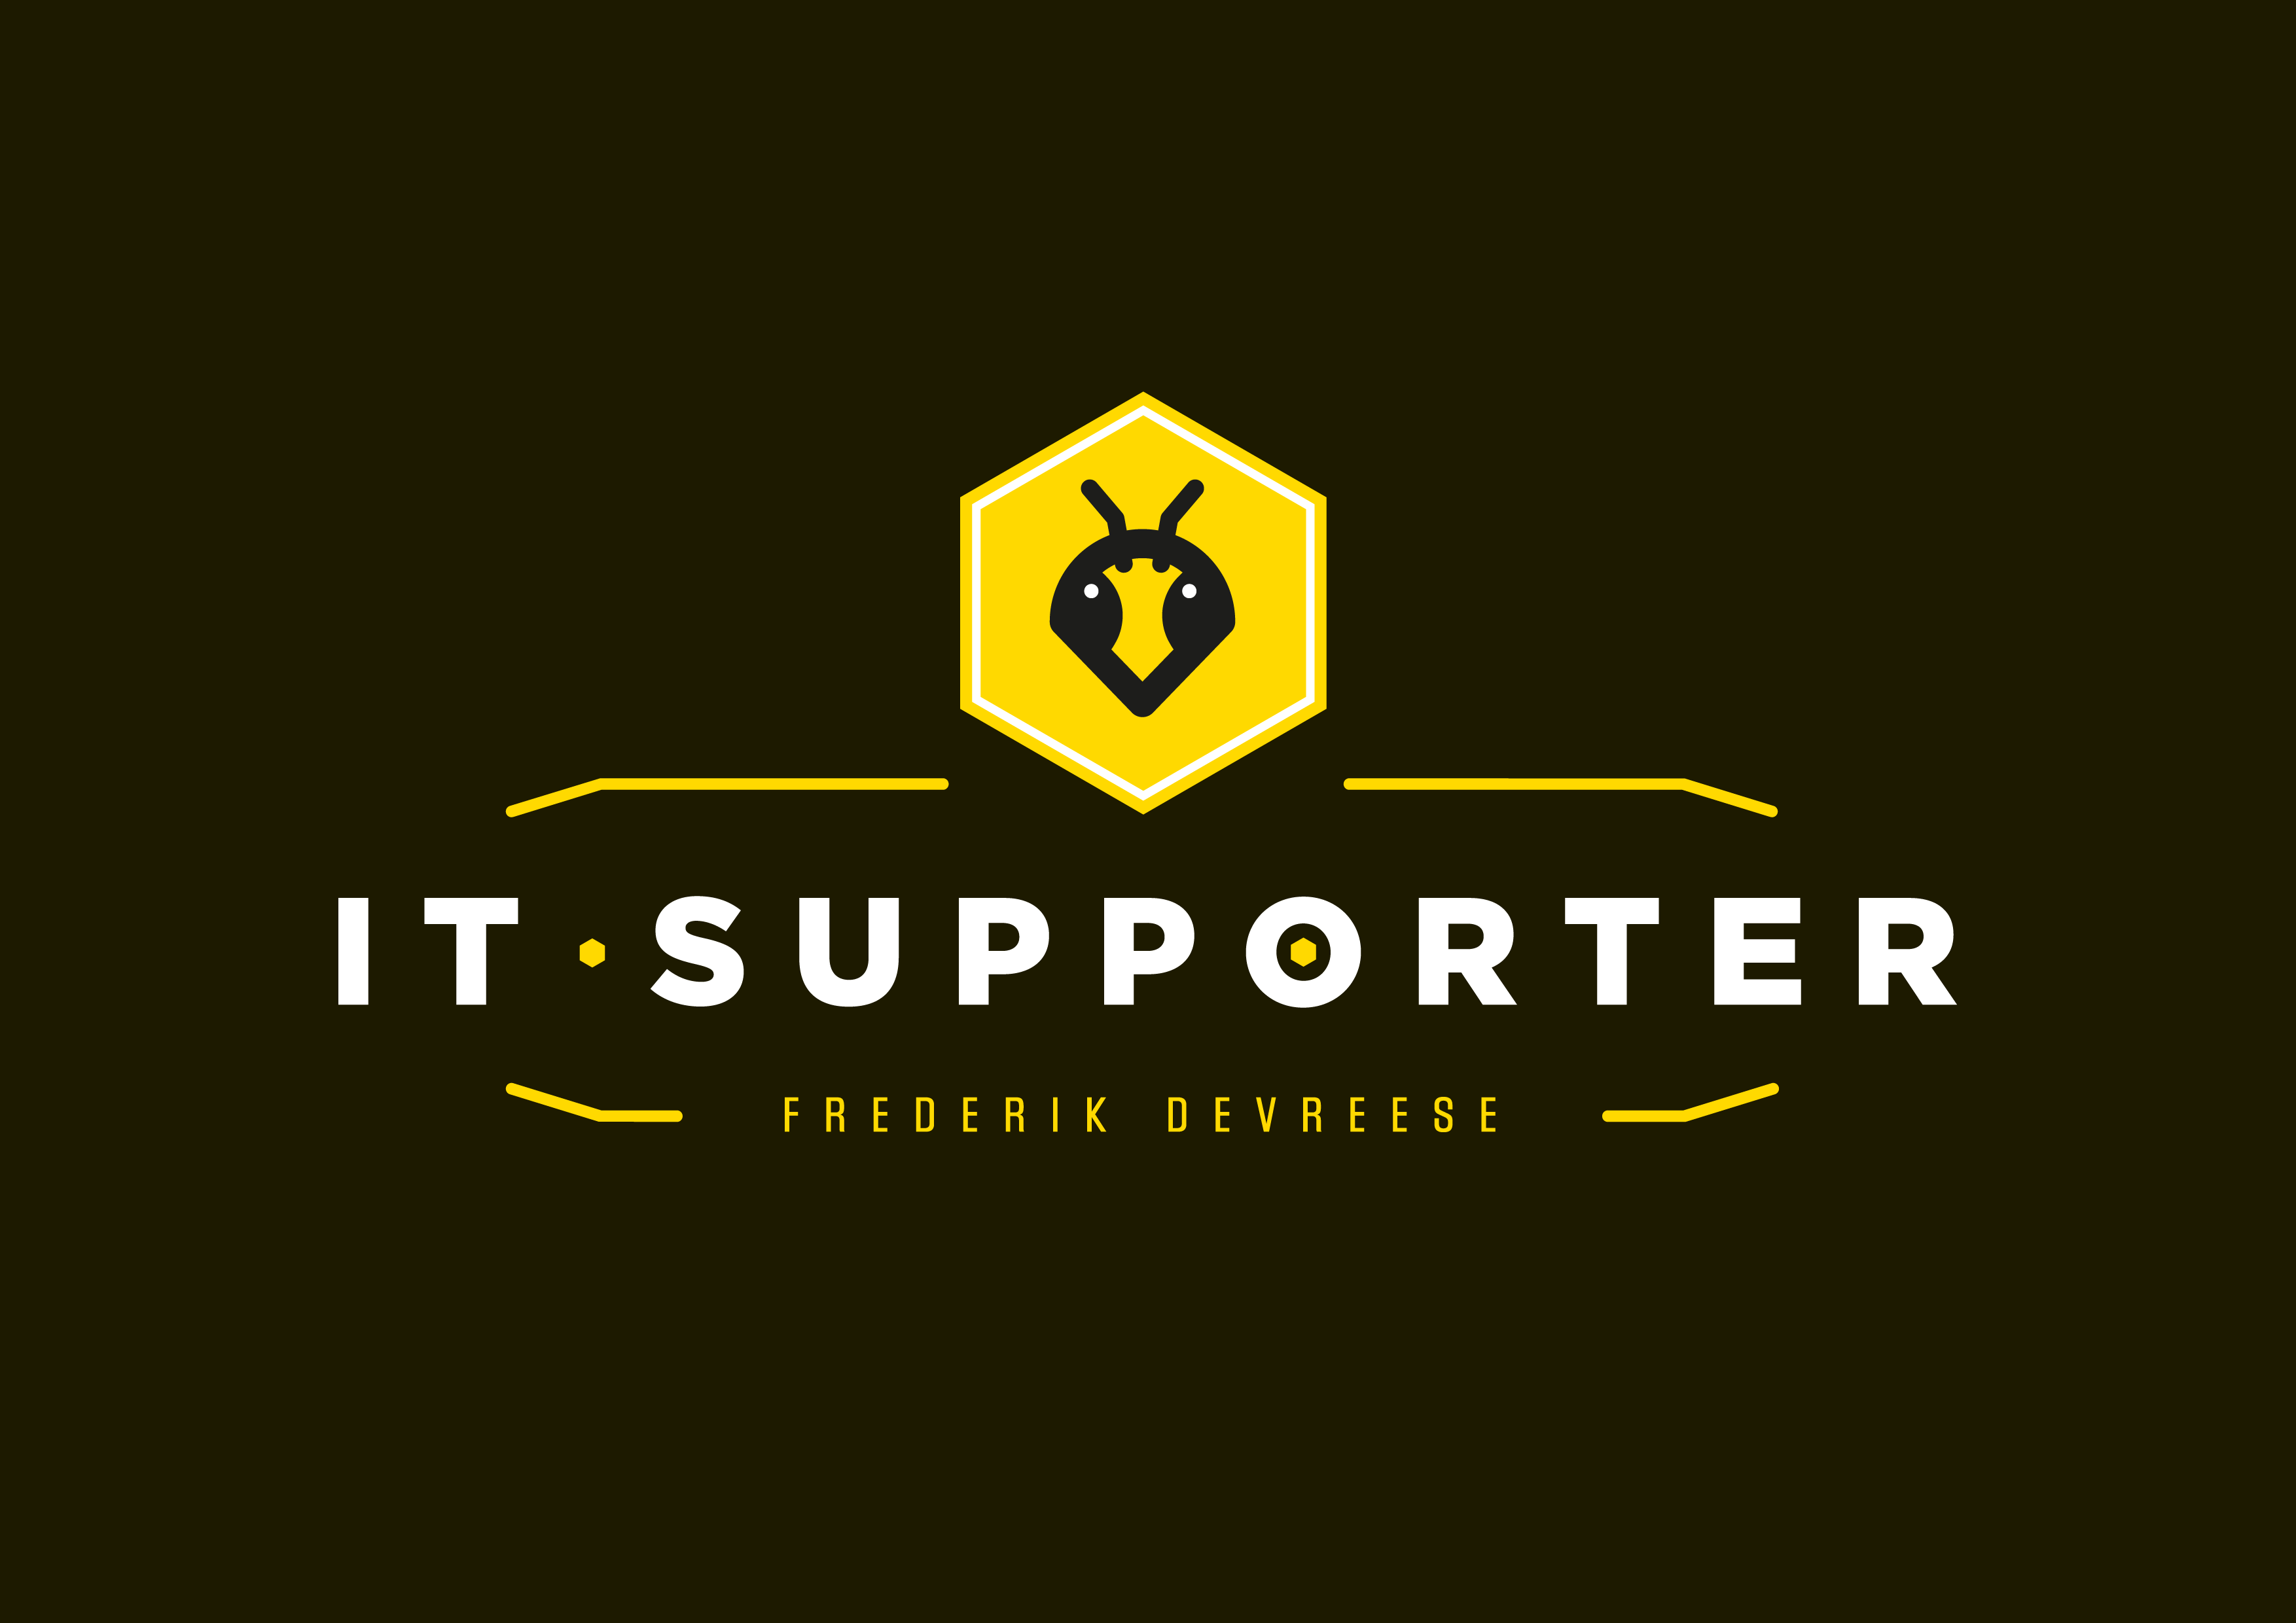 www.it-supporter.be